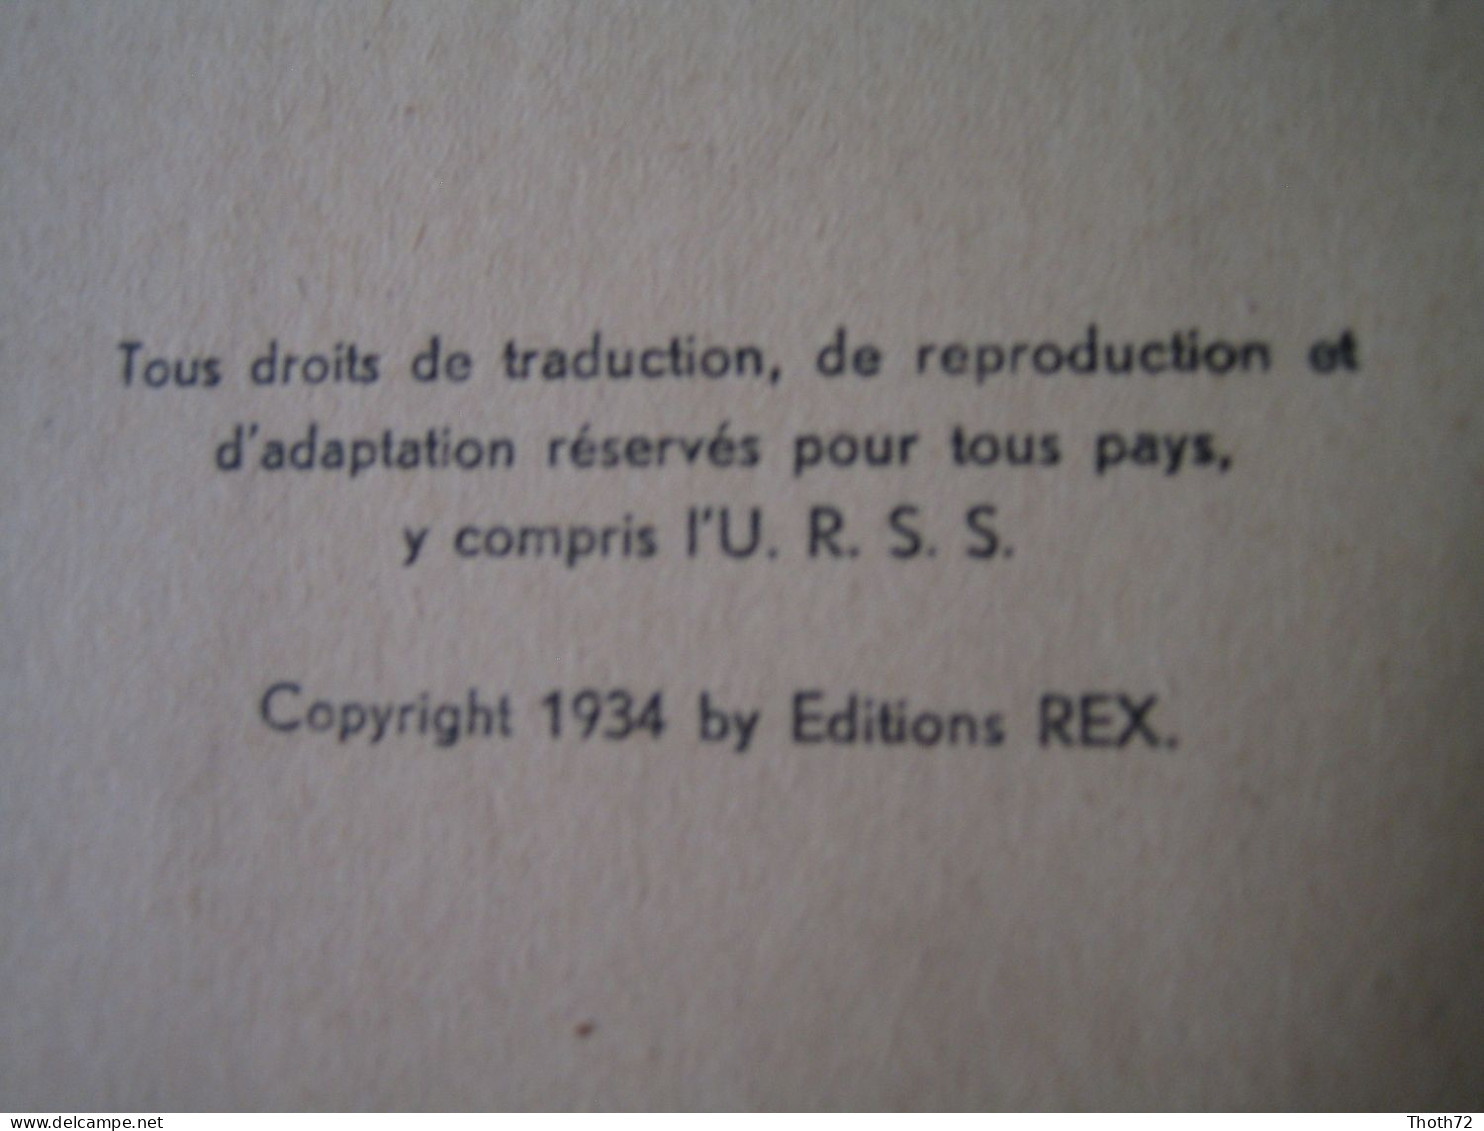 LE ROI ALBERT. Pierre NOTHOMB. 1934 Editions REX Léon DEGRELLE. - Francés